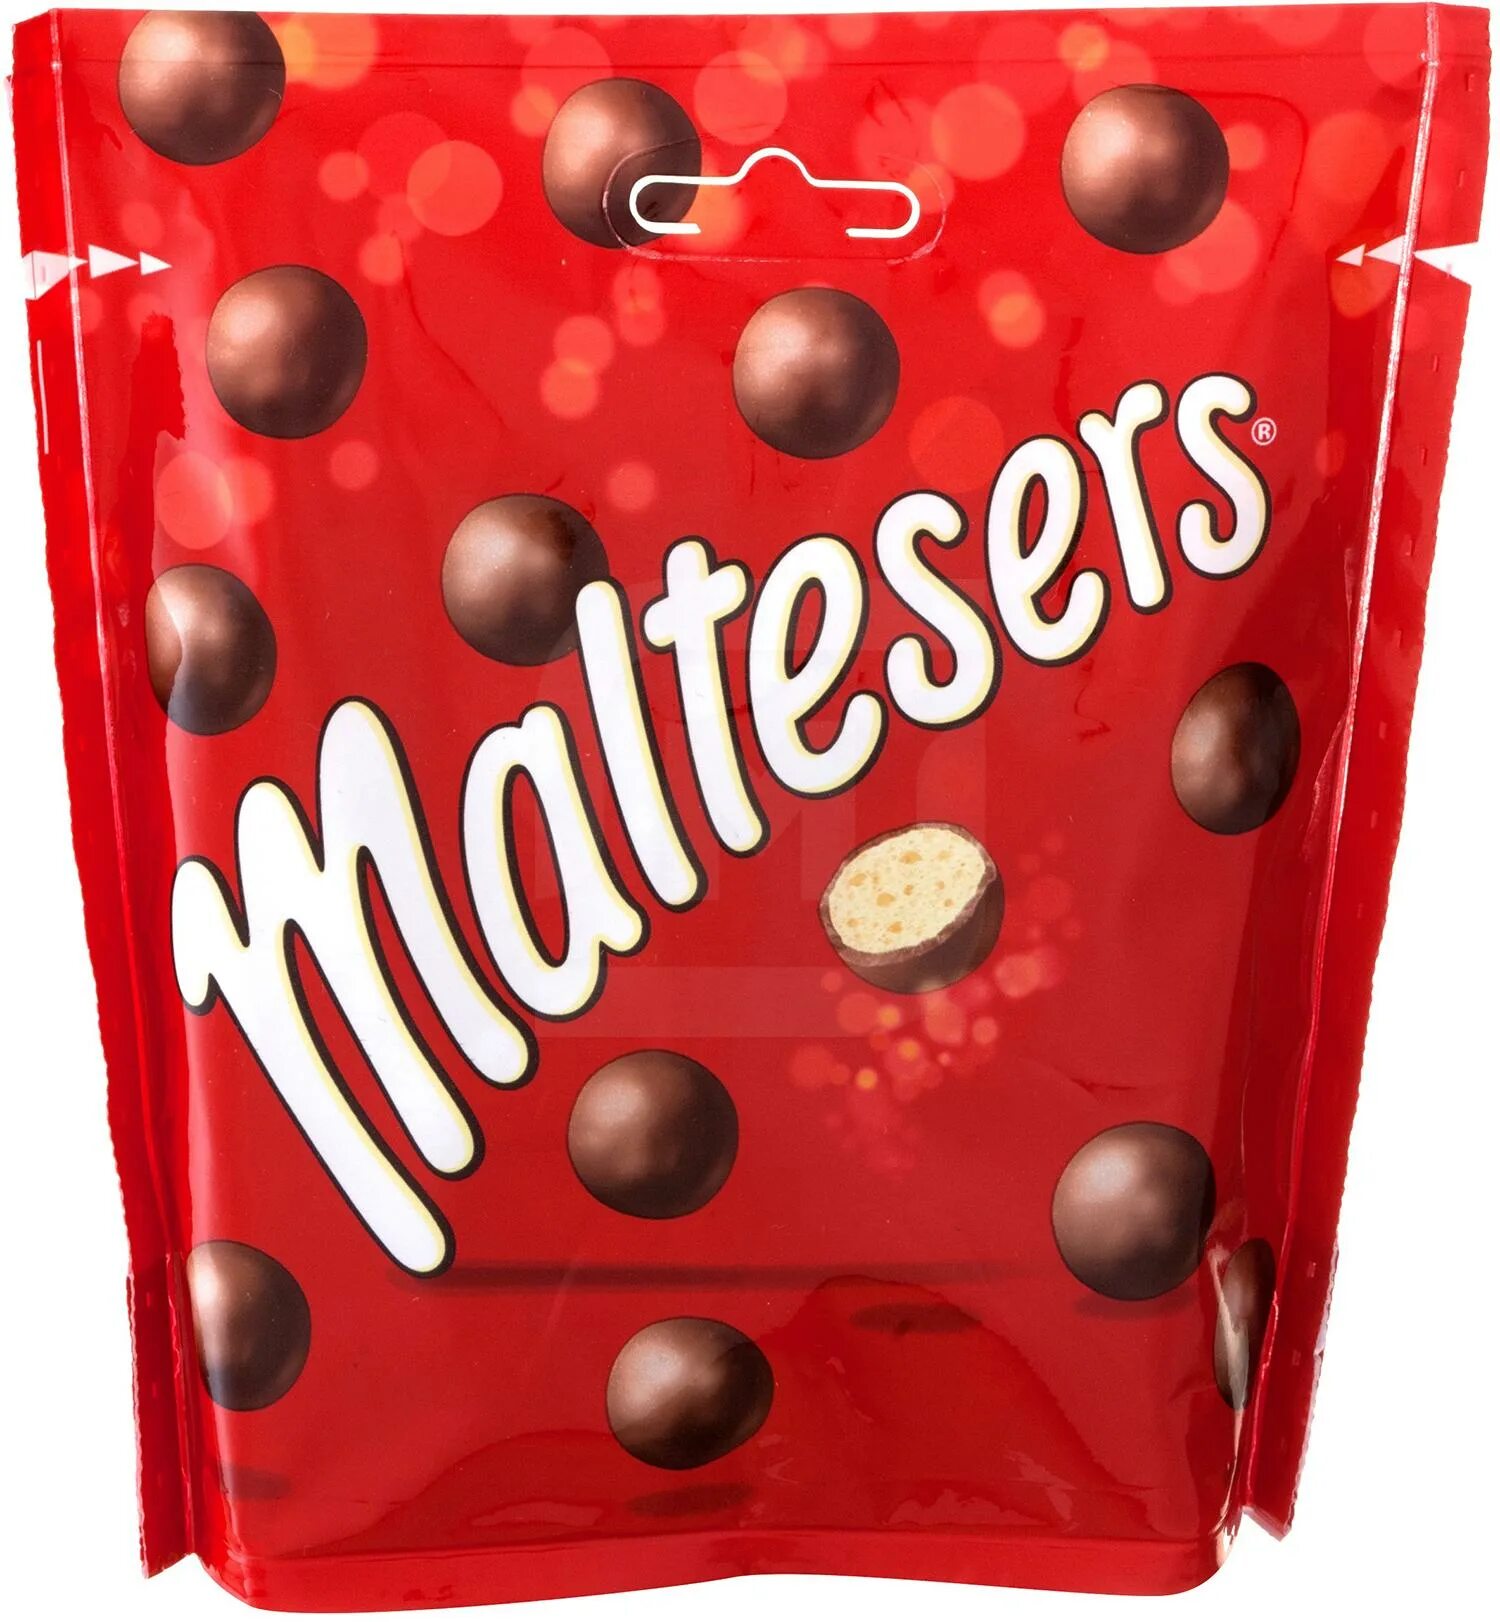 Maltesers шарики купить. Драже Maltesers. Шоколадное драже Maltesers. Мальтизерс шоколадные шарики. Конфеты Maltesers шоколадные шарики.